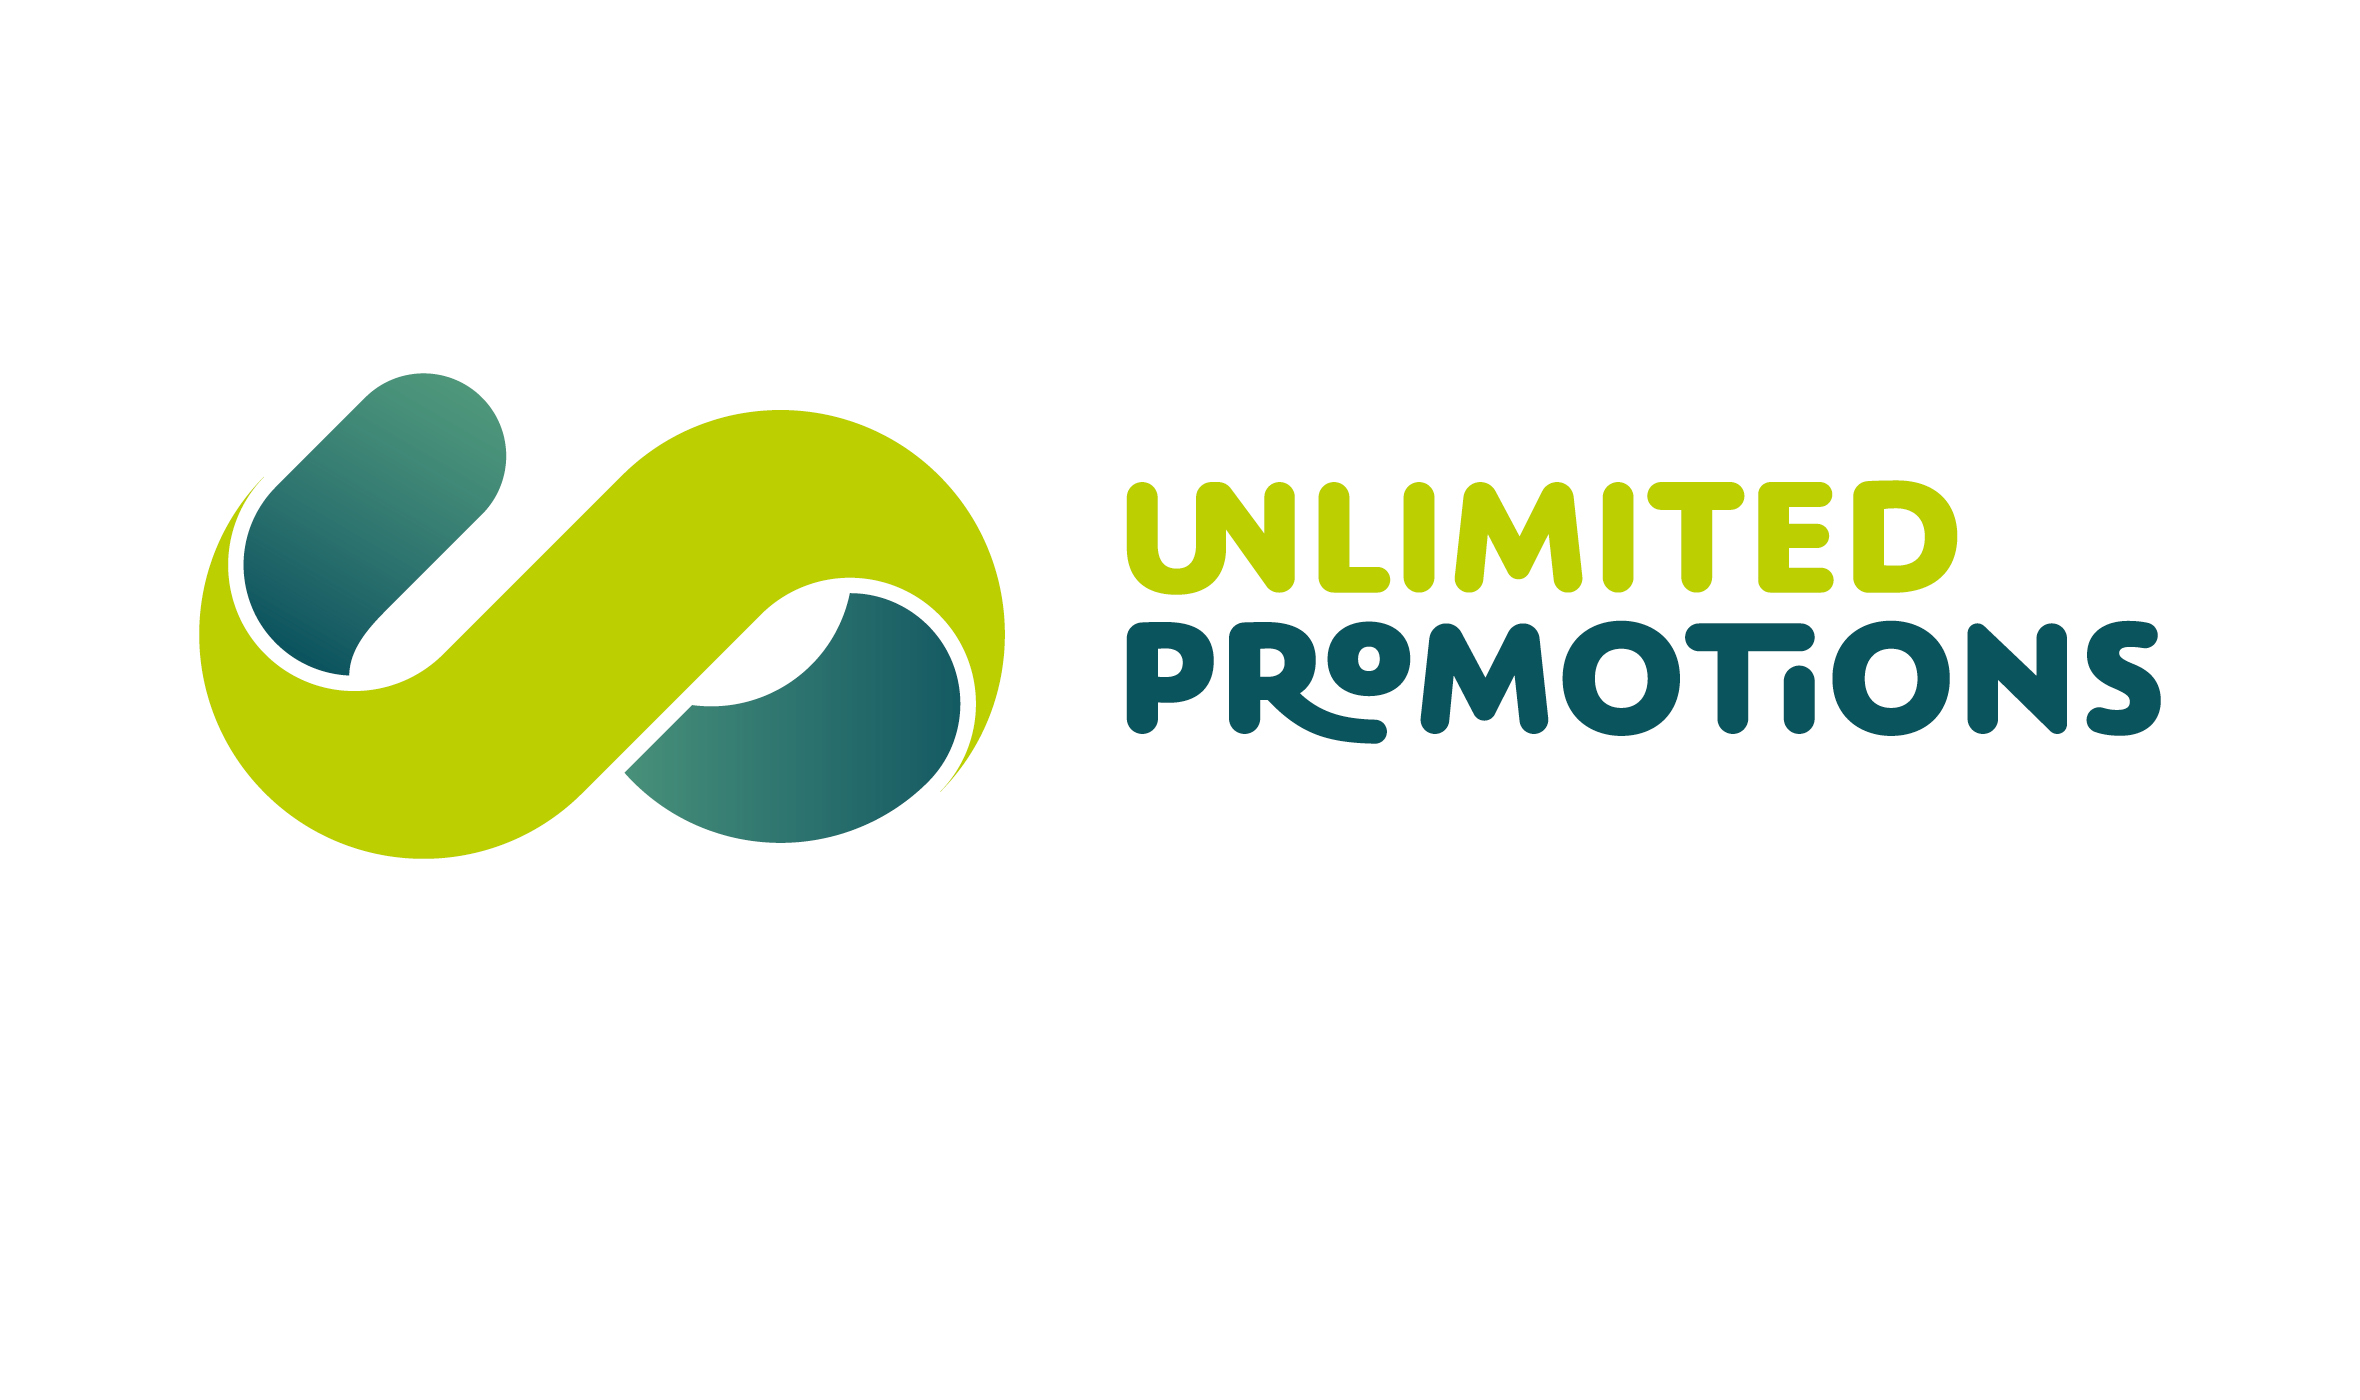 Unlimited Promotions, Logoentwicklung, Wort-Bildmarke, horizontal